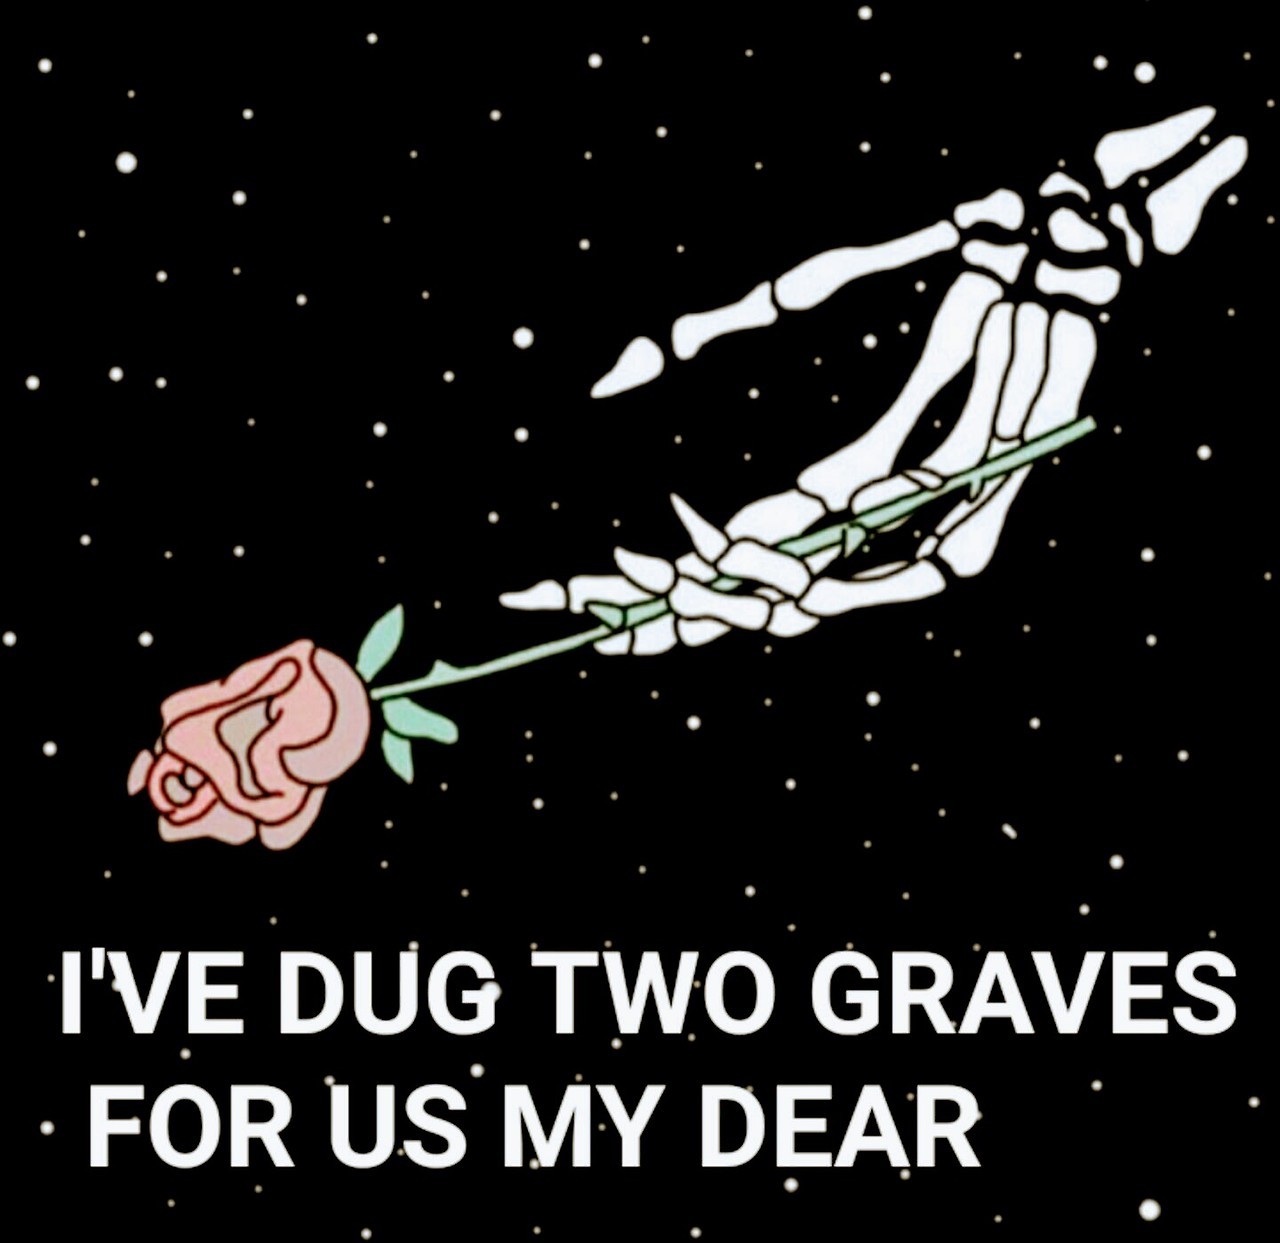 I've dug two graves for us my dear lyrics